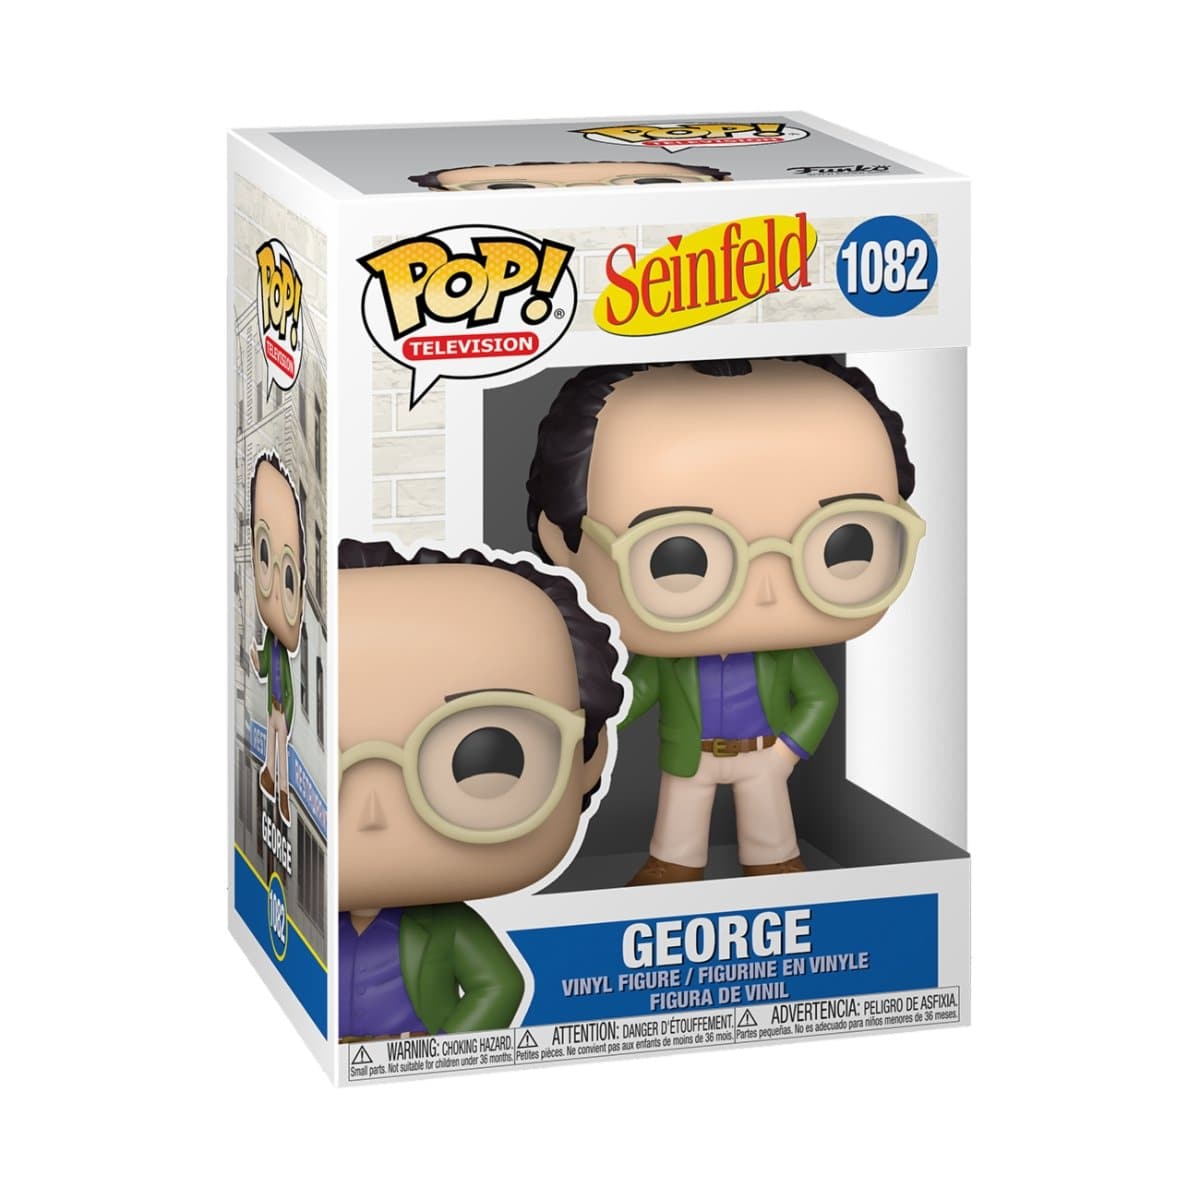 TV - Seinfeld - George POP! Vinyl Figure PREORDER - Pop Figures